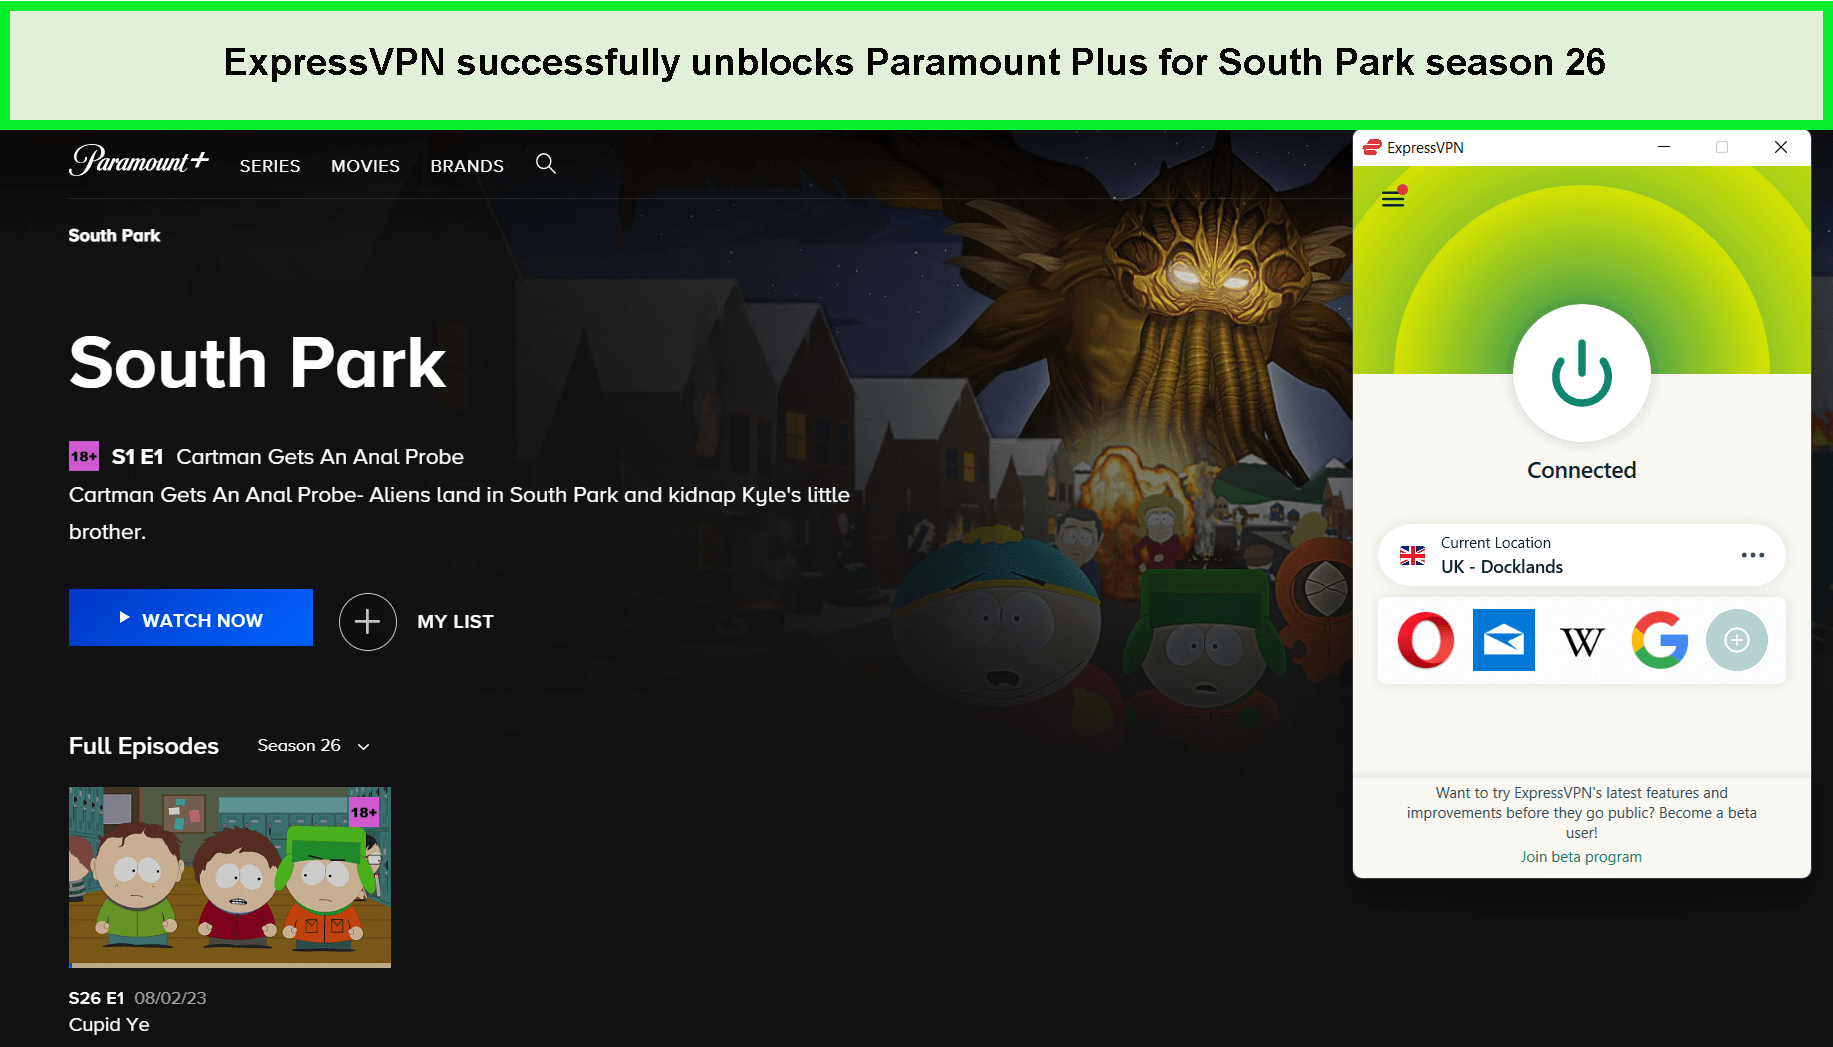 expressvpn-unblock-paramount-plus-for-south-park-season-26-in-canada